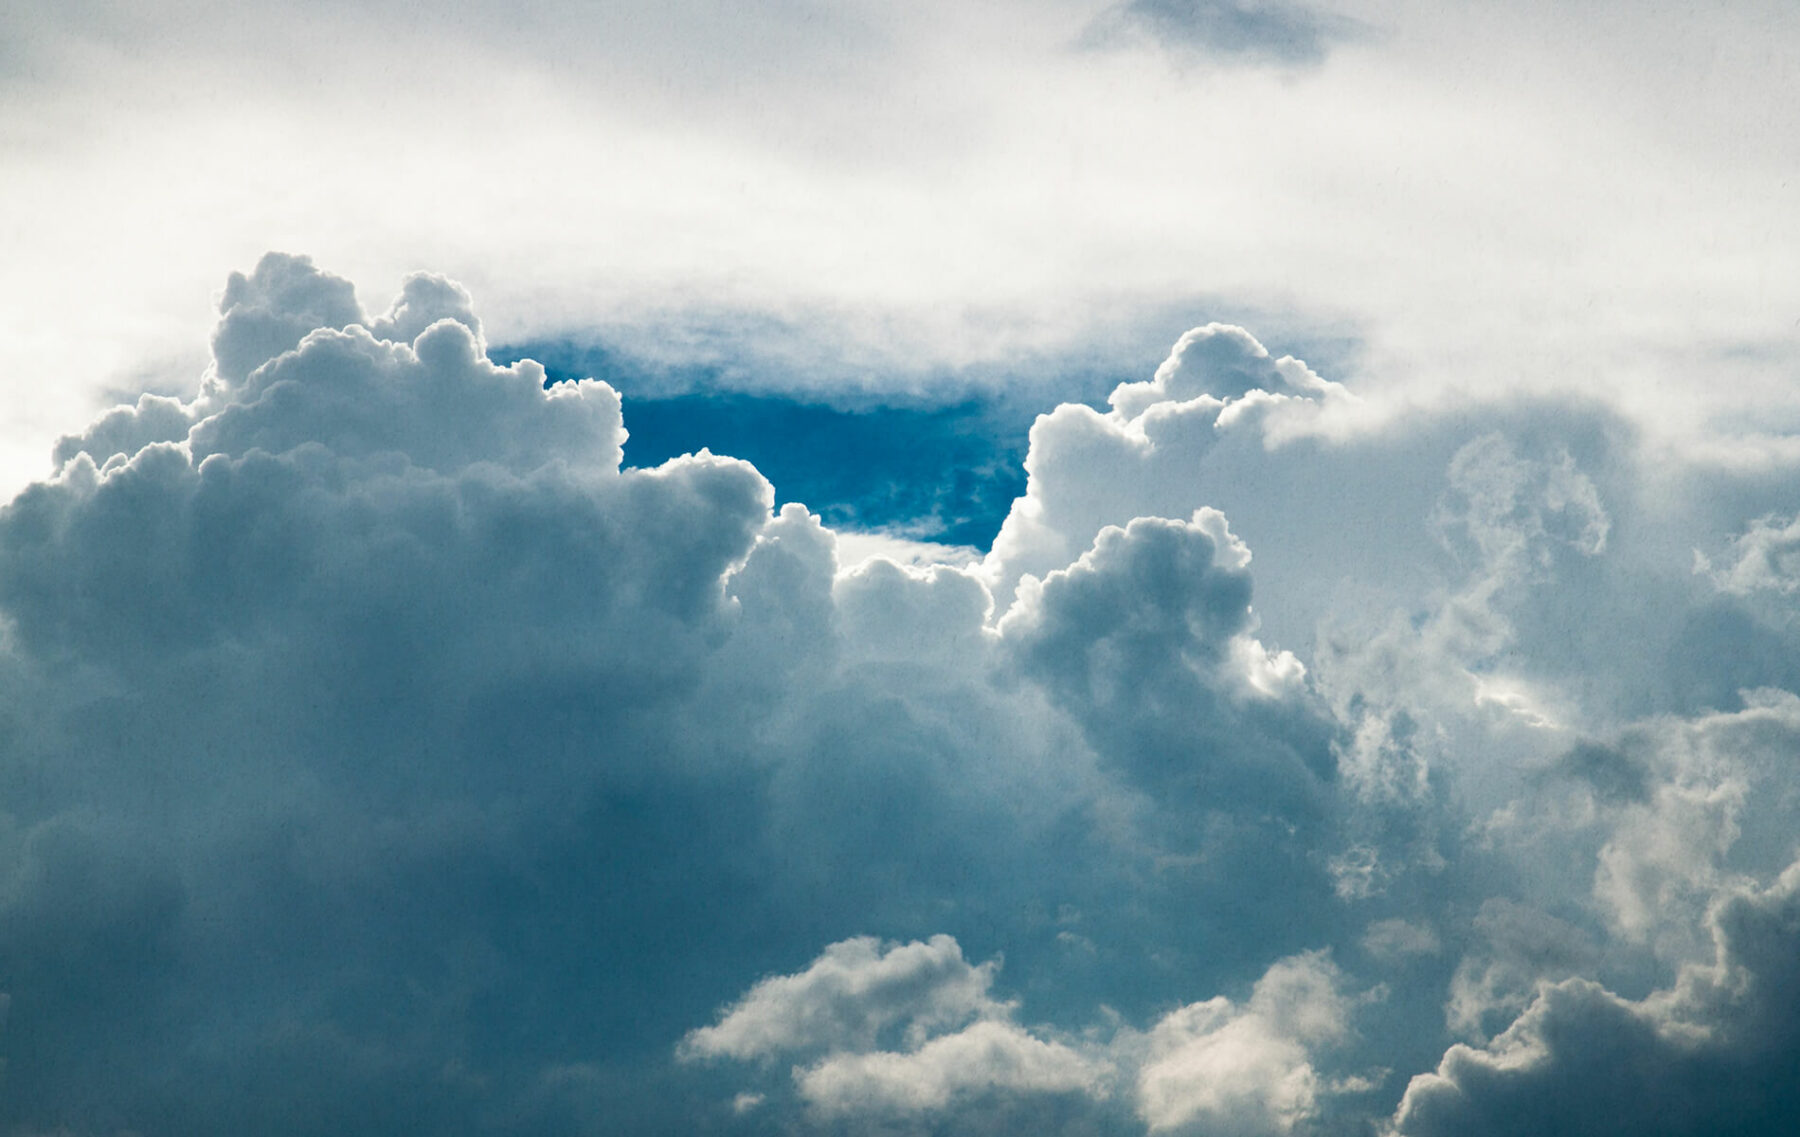 a plane flying through a cloudy blue sky.